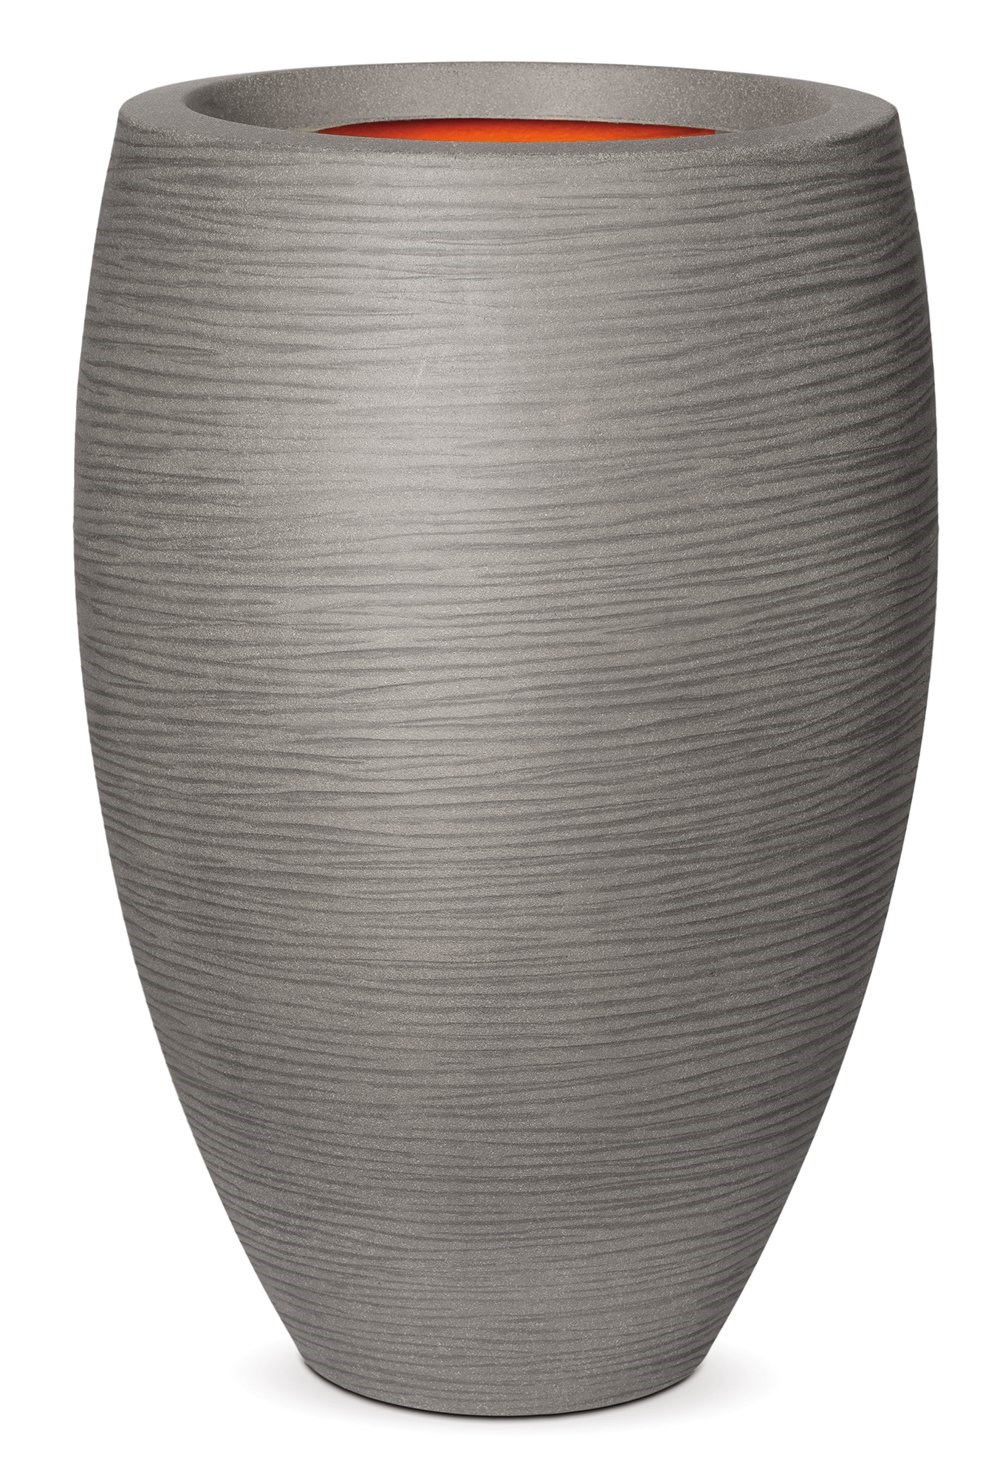 84cm Capi Nature Rib NL Elegant Deluxe Vase Planter in Grey